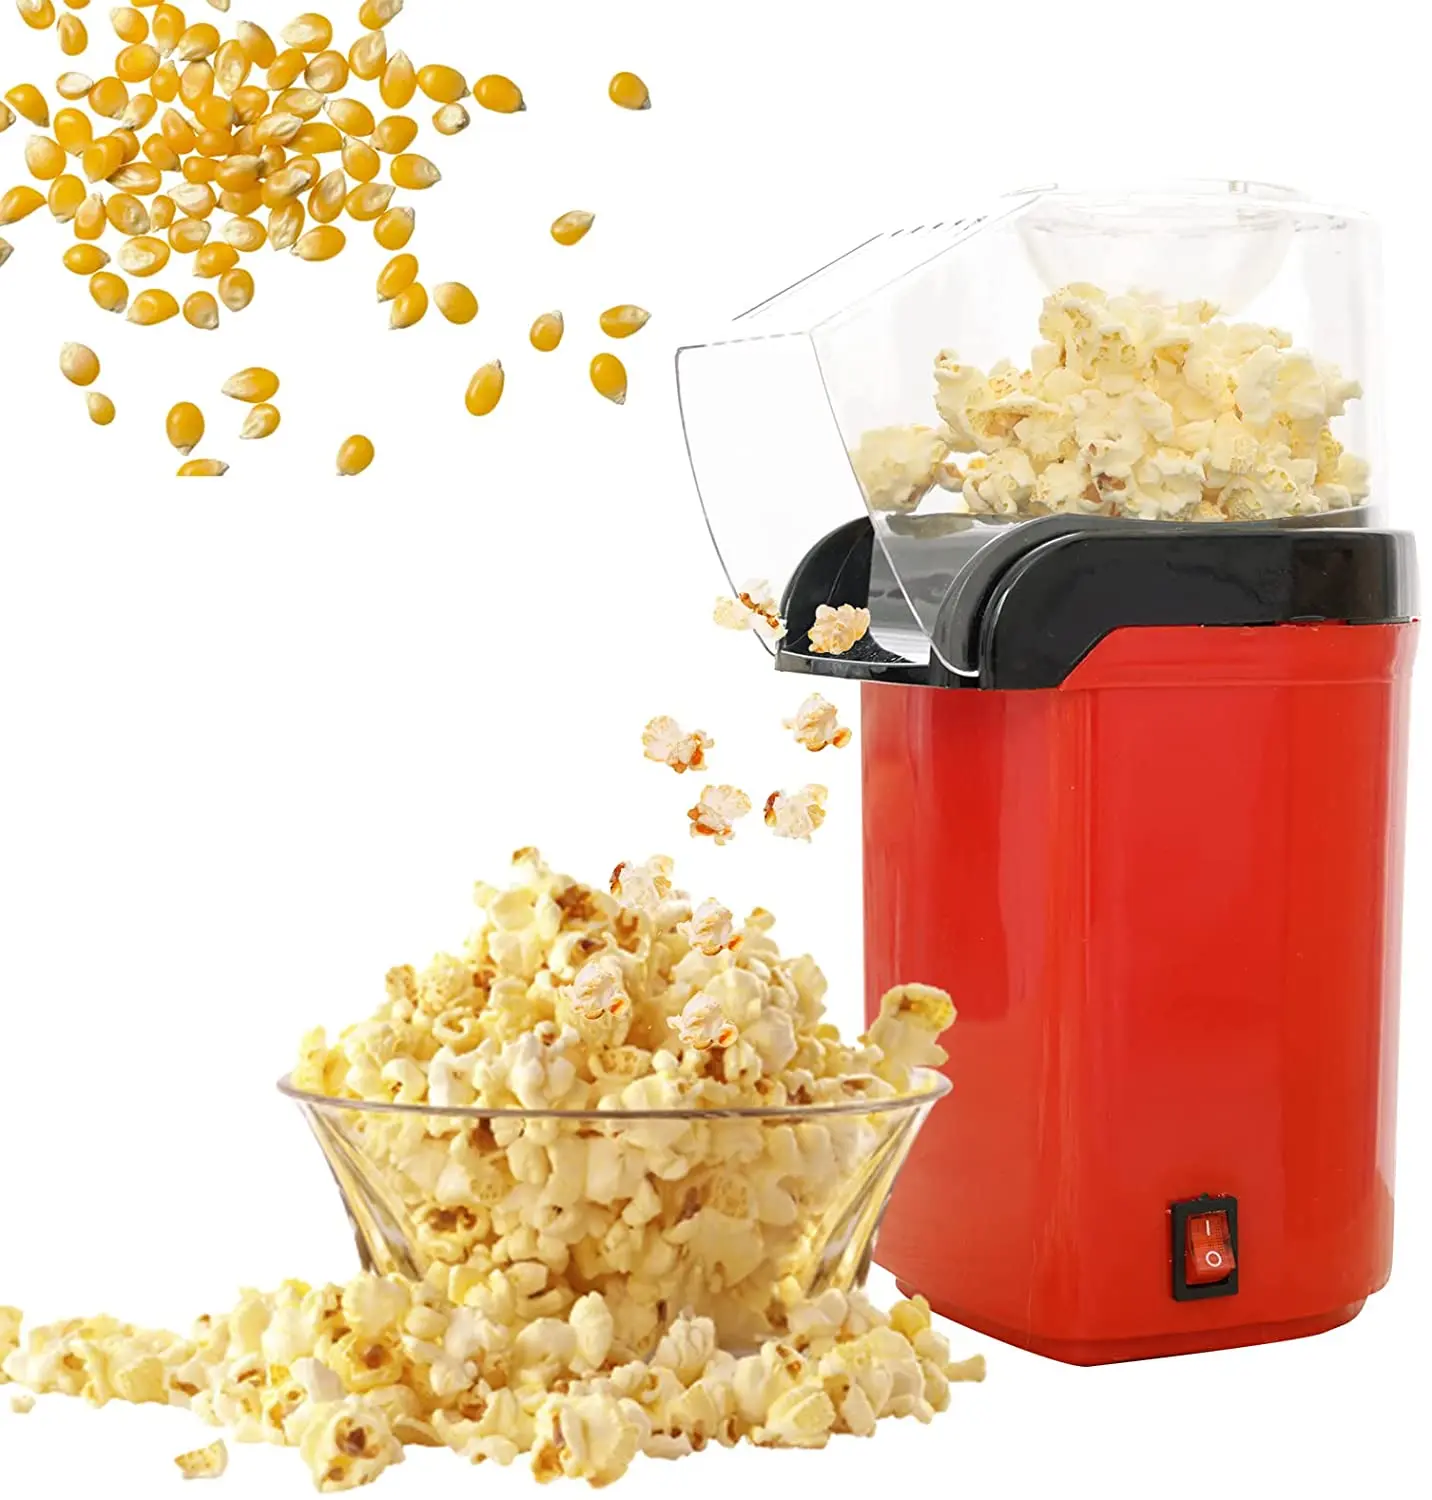 Black No Oil Needed Popcorn Maker Hot Air Popcorn Popper 1200W Popcorn Machine for Home Use Healthy Air Popcorn maker 